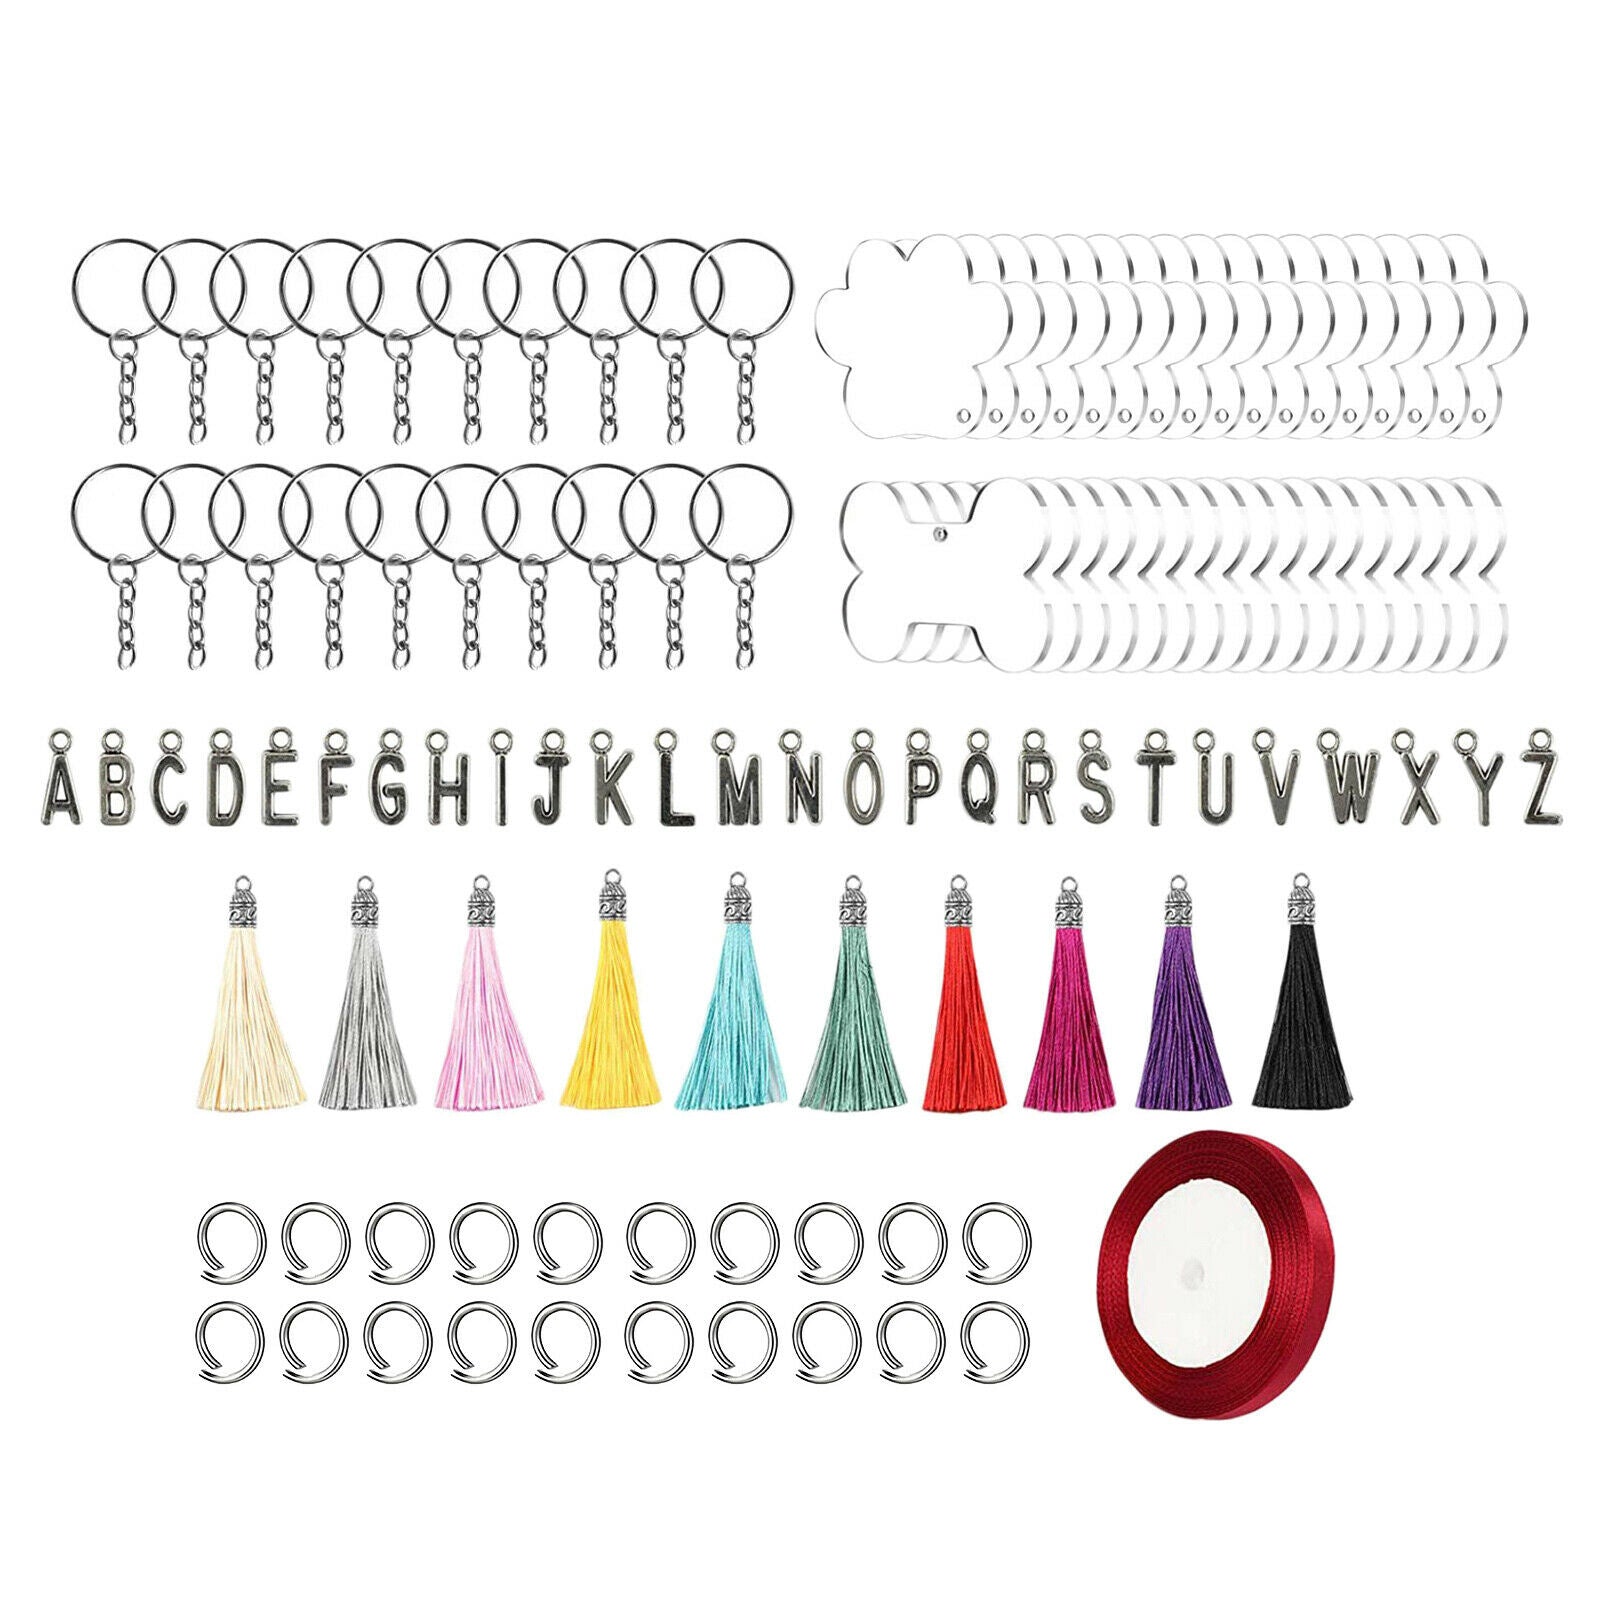 120 cs acrylic key ring blank set including key ring with